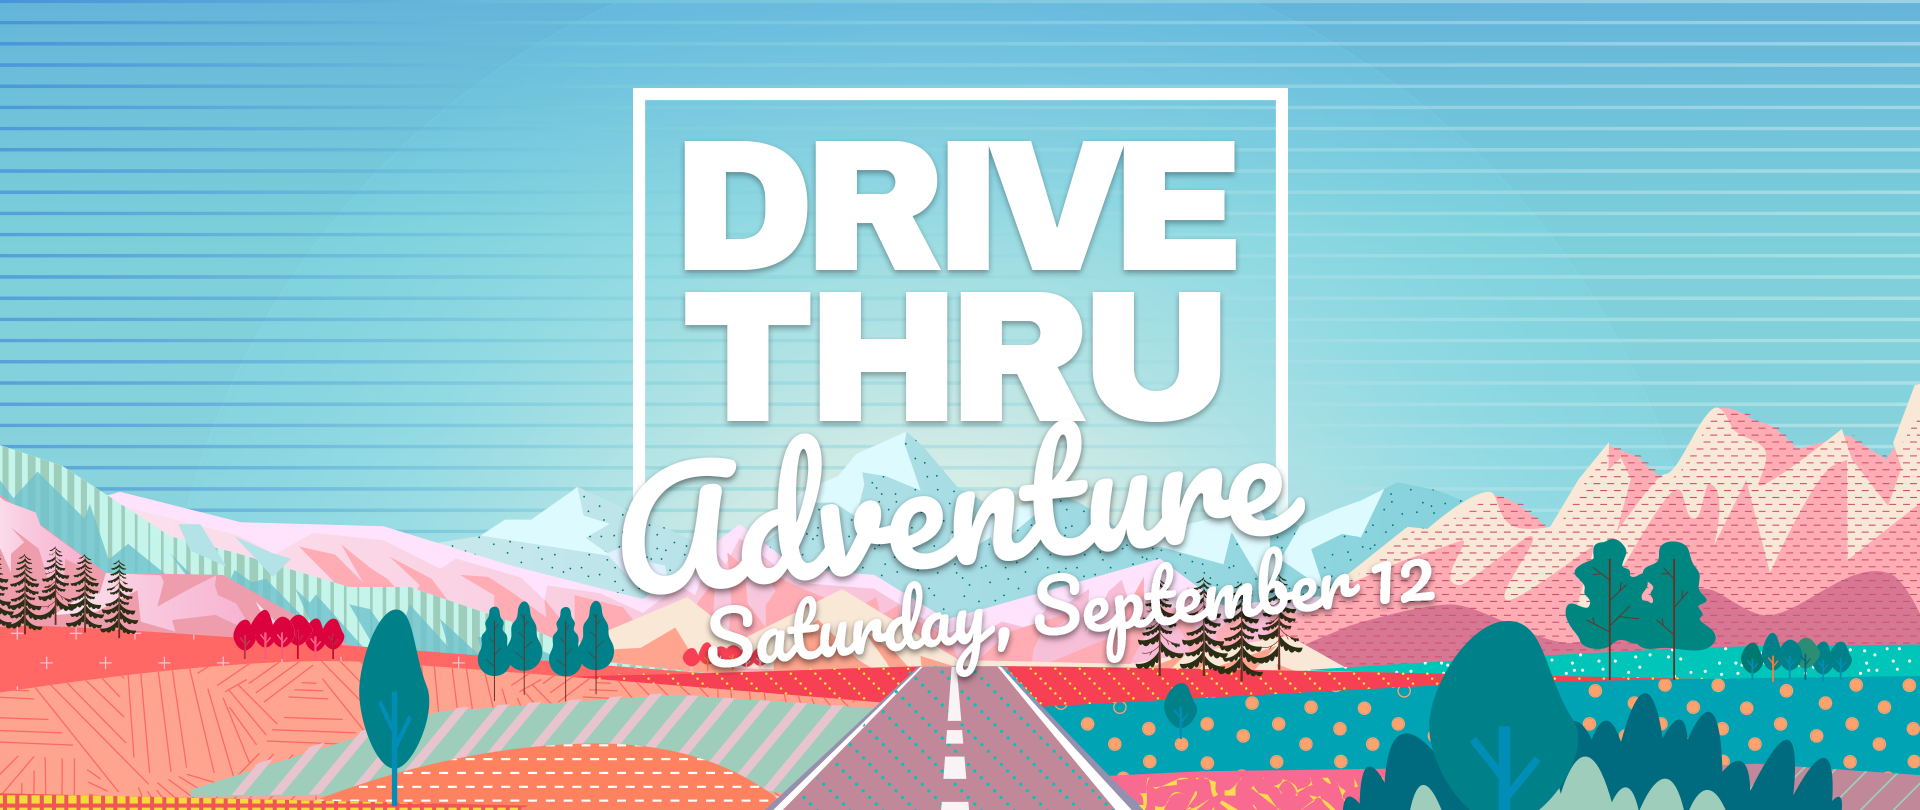 Drive Thru Adventure
FUN scavenger hunt competition!
Saturday, September 12
Register now!
